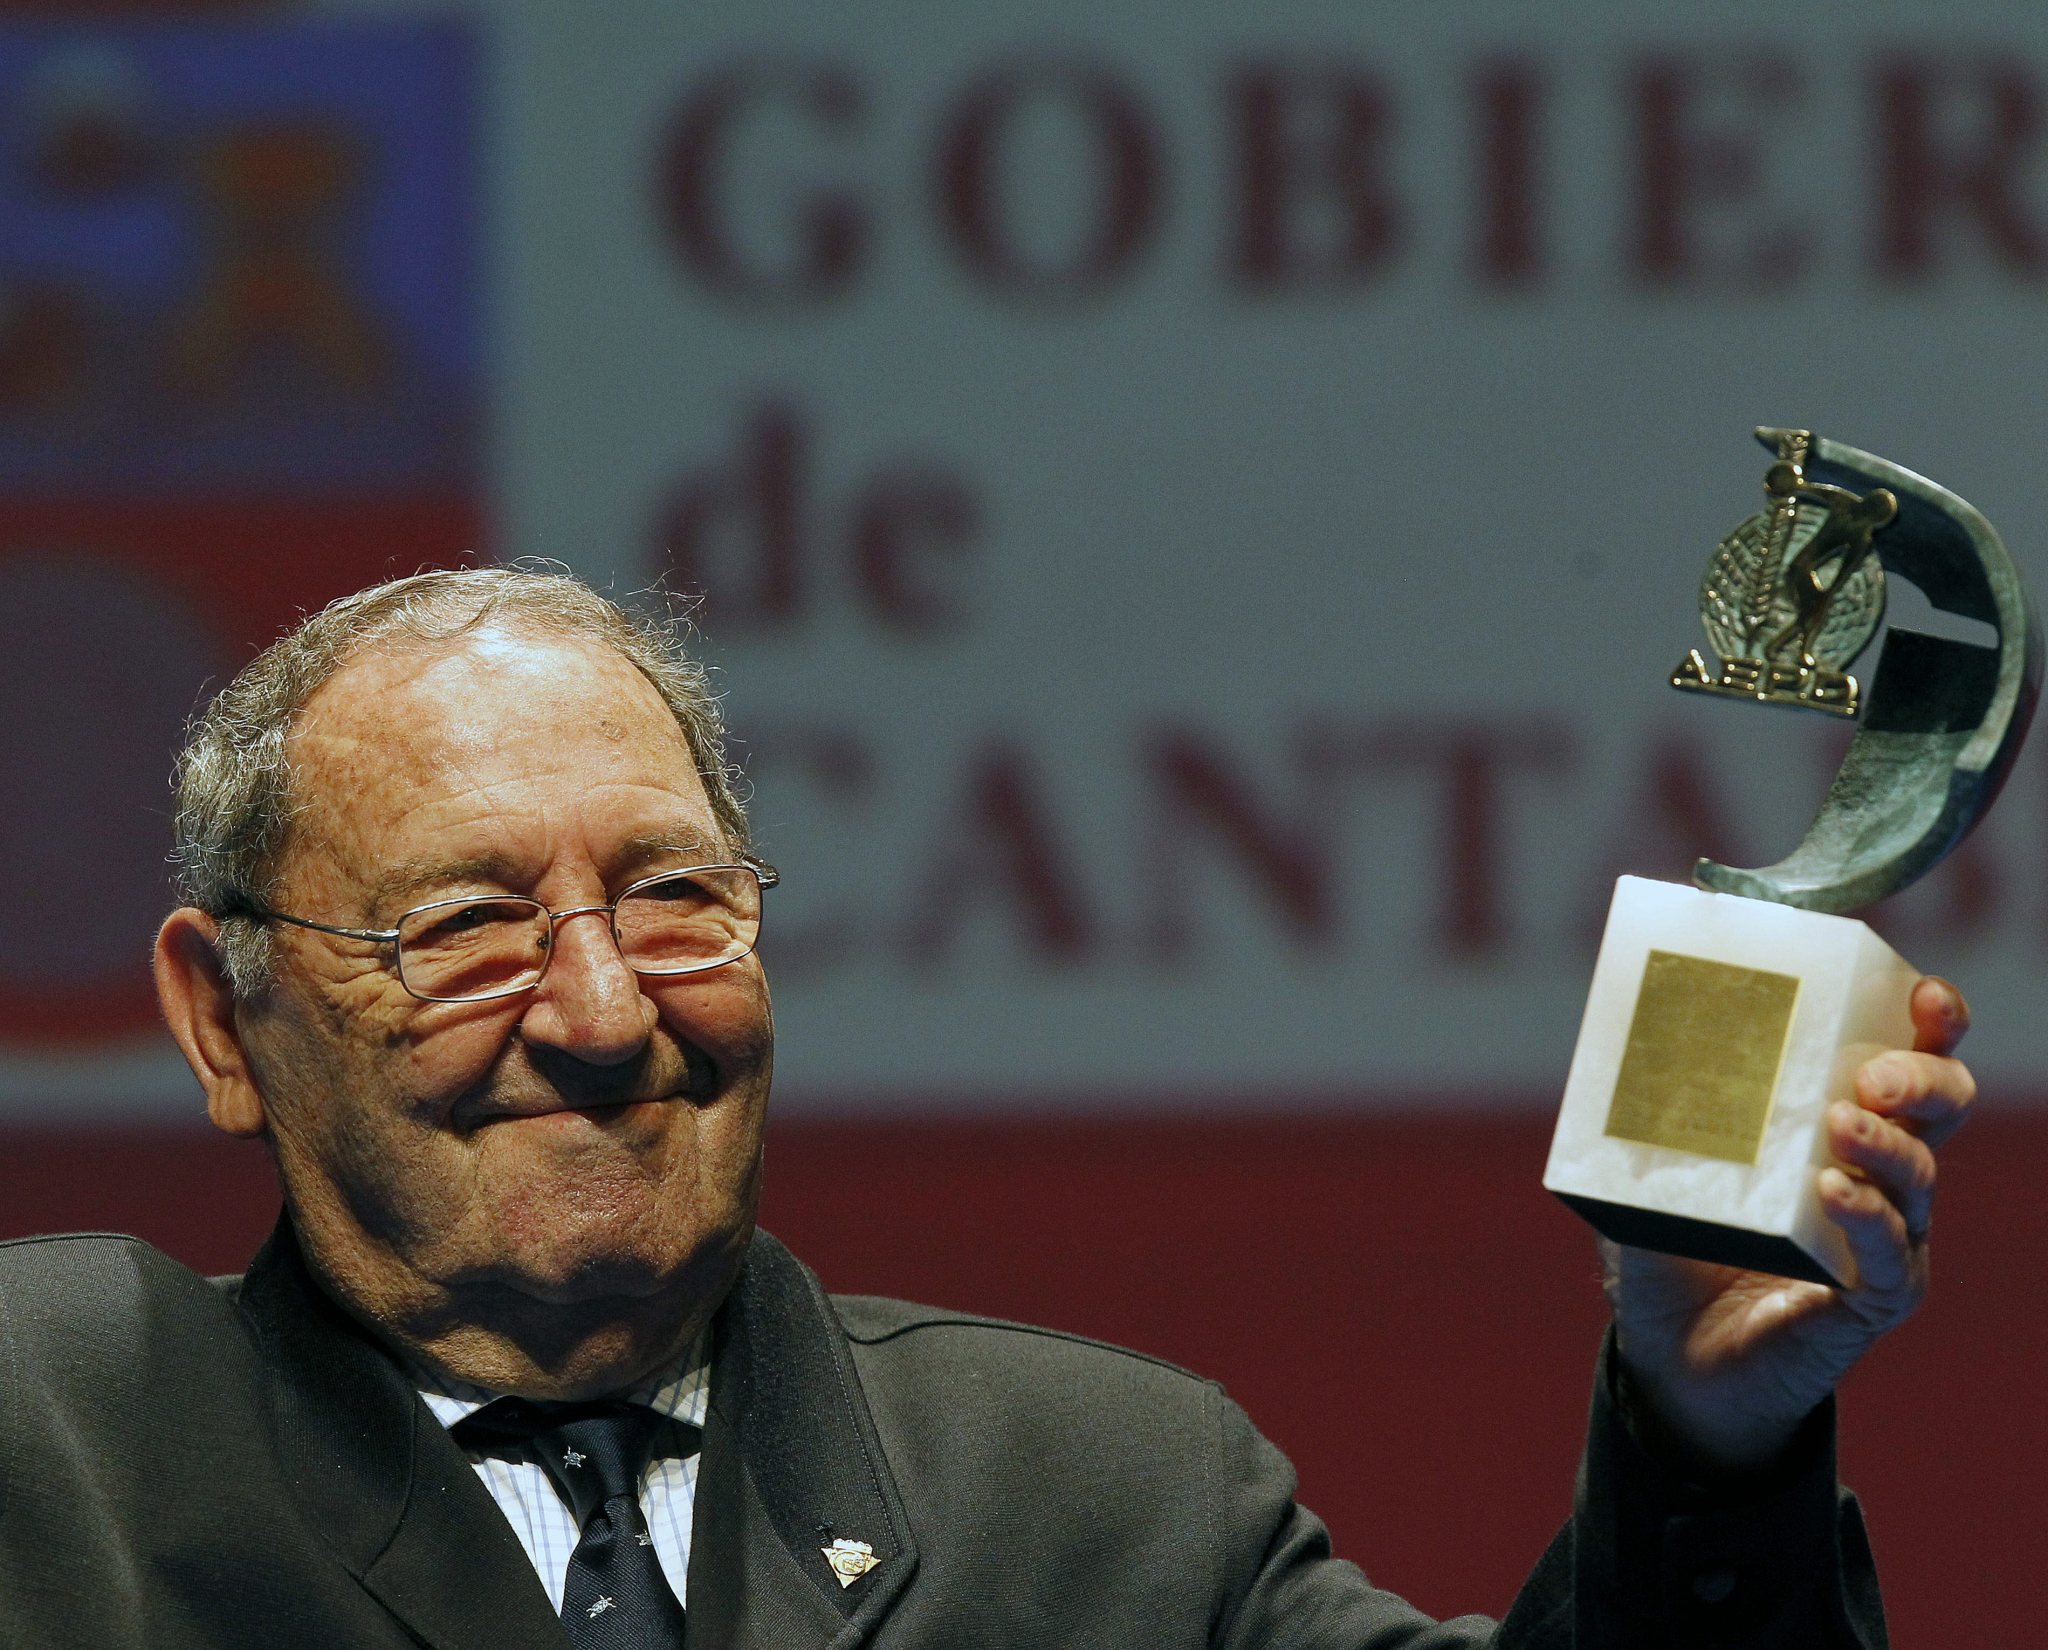 TUGA! Preminuo najveći španski fudbaler svih vremena i legenda Real Madrida!